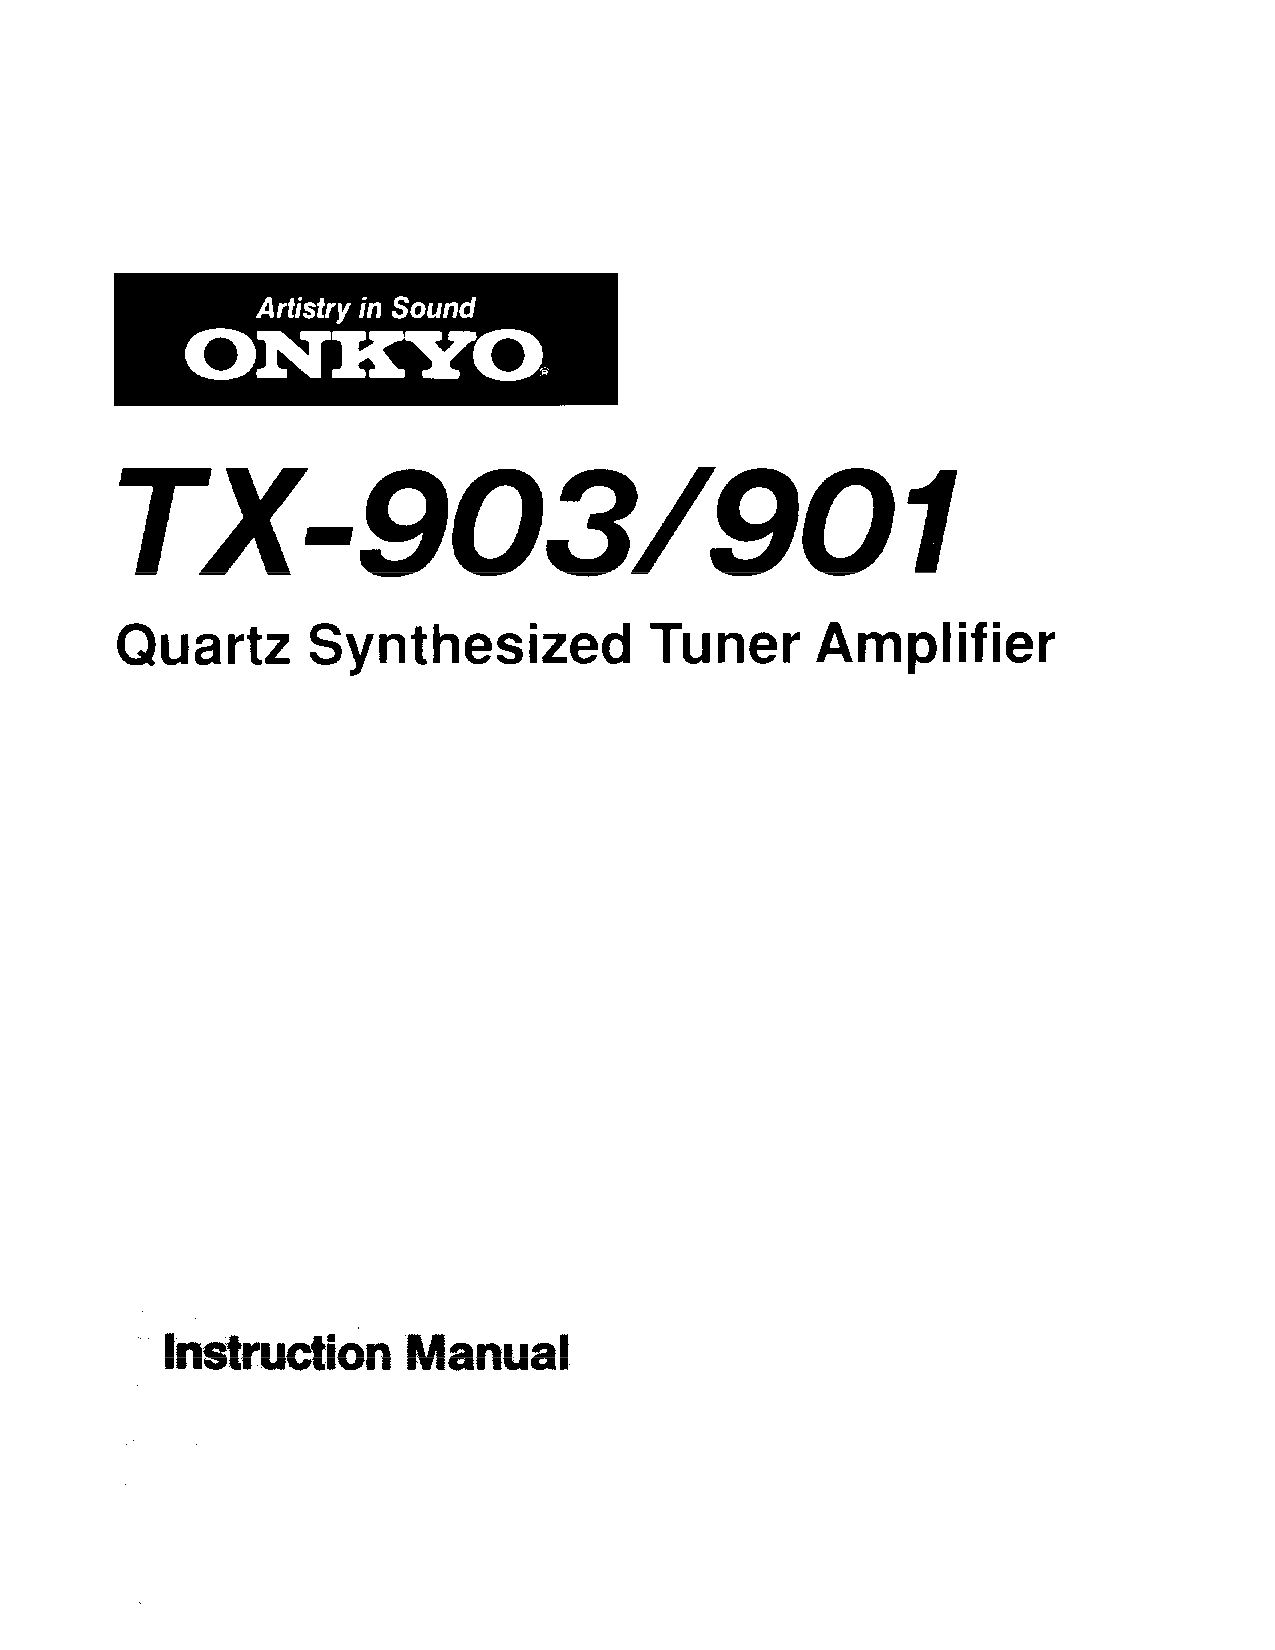 Onkyo TX-901, TX-903 Instruction Manual